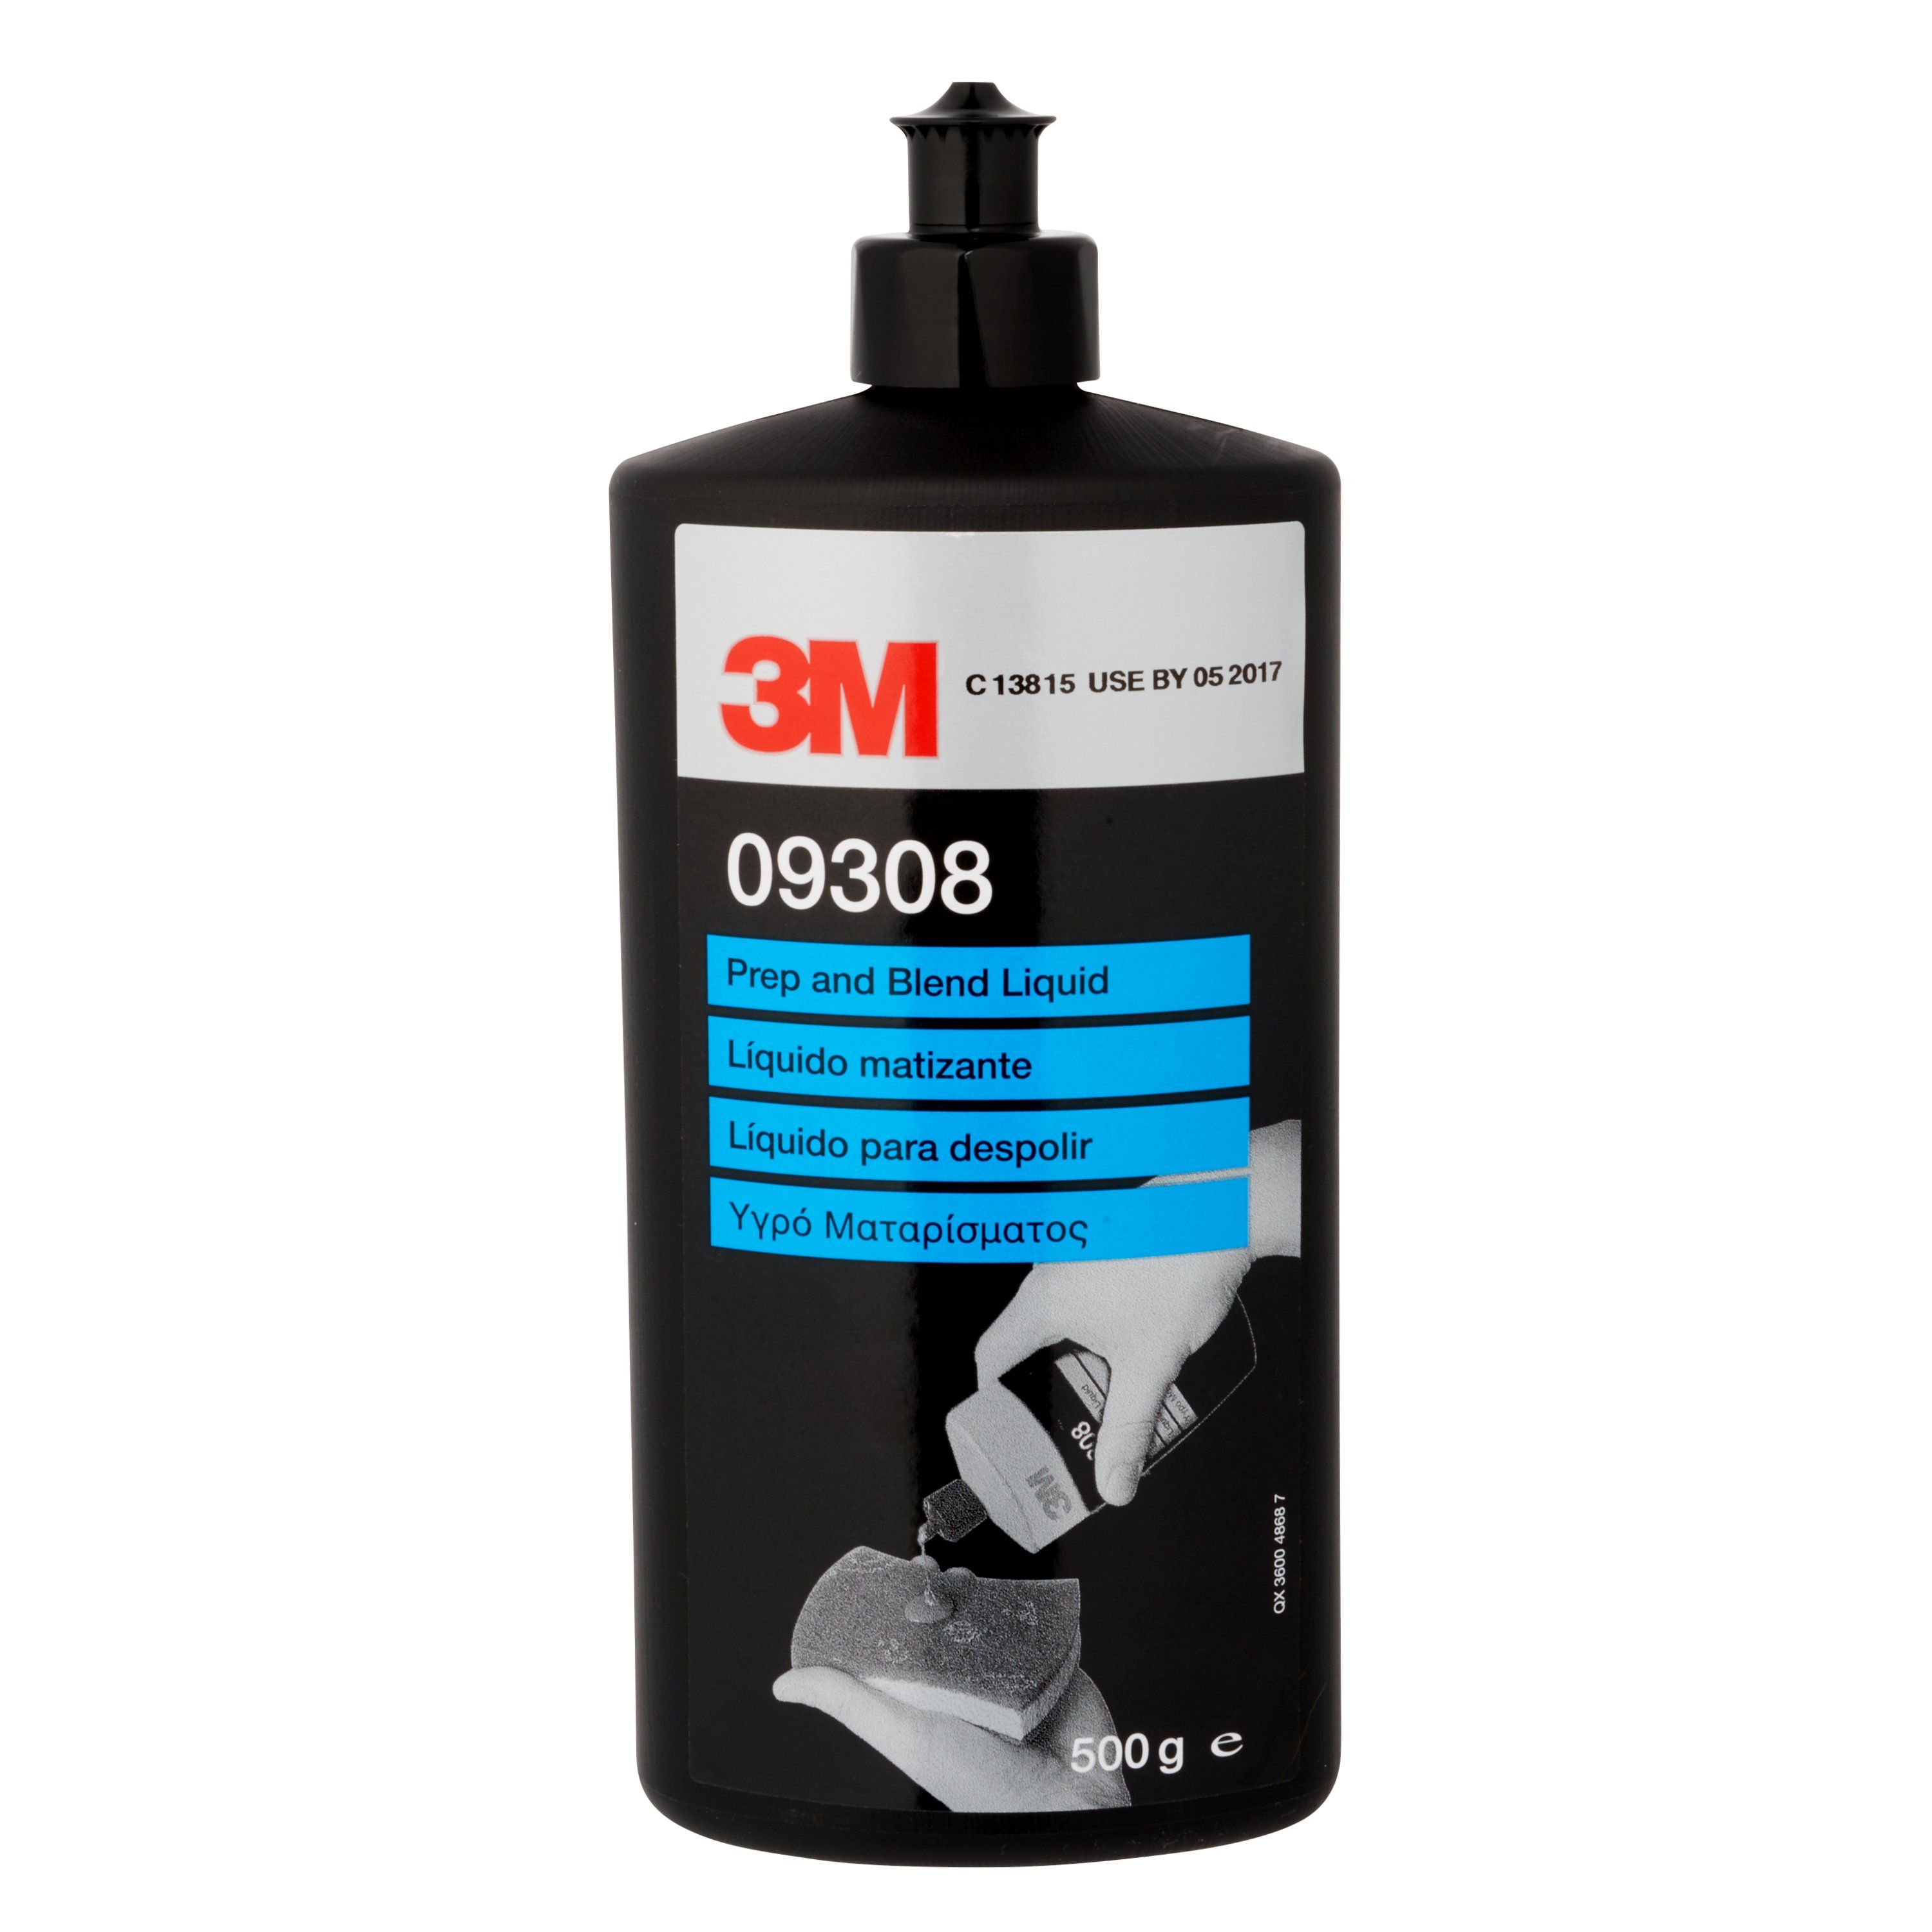 3M™ Prep and Blend Liquid, 0.5 kg, 09308